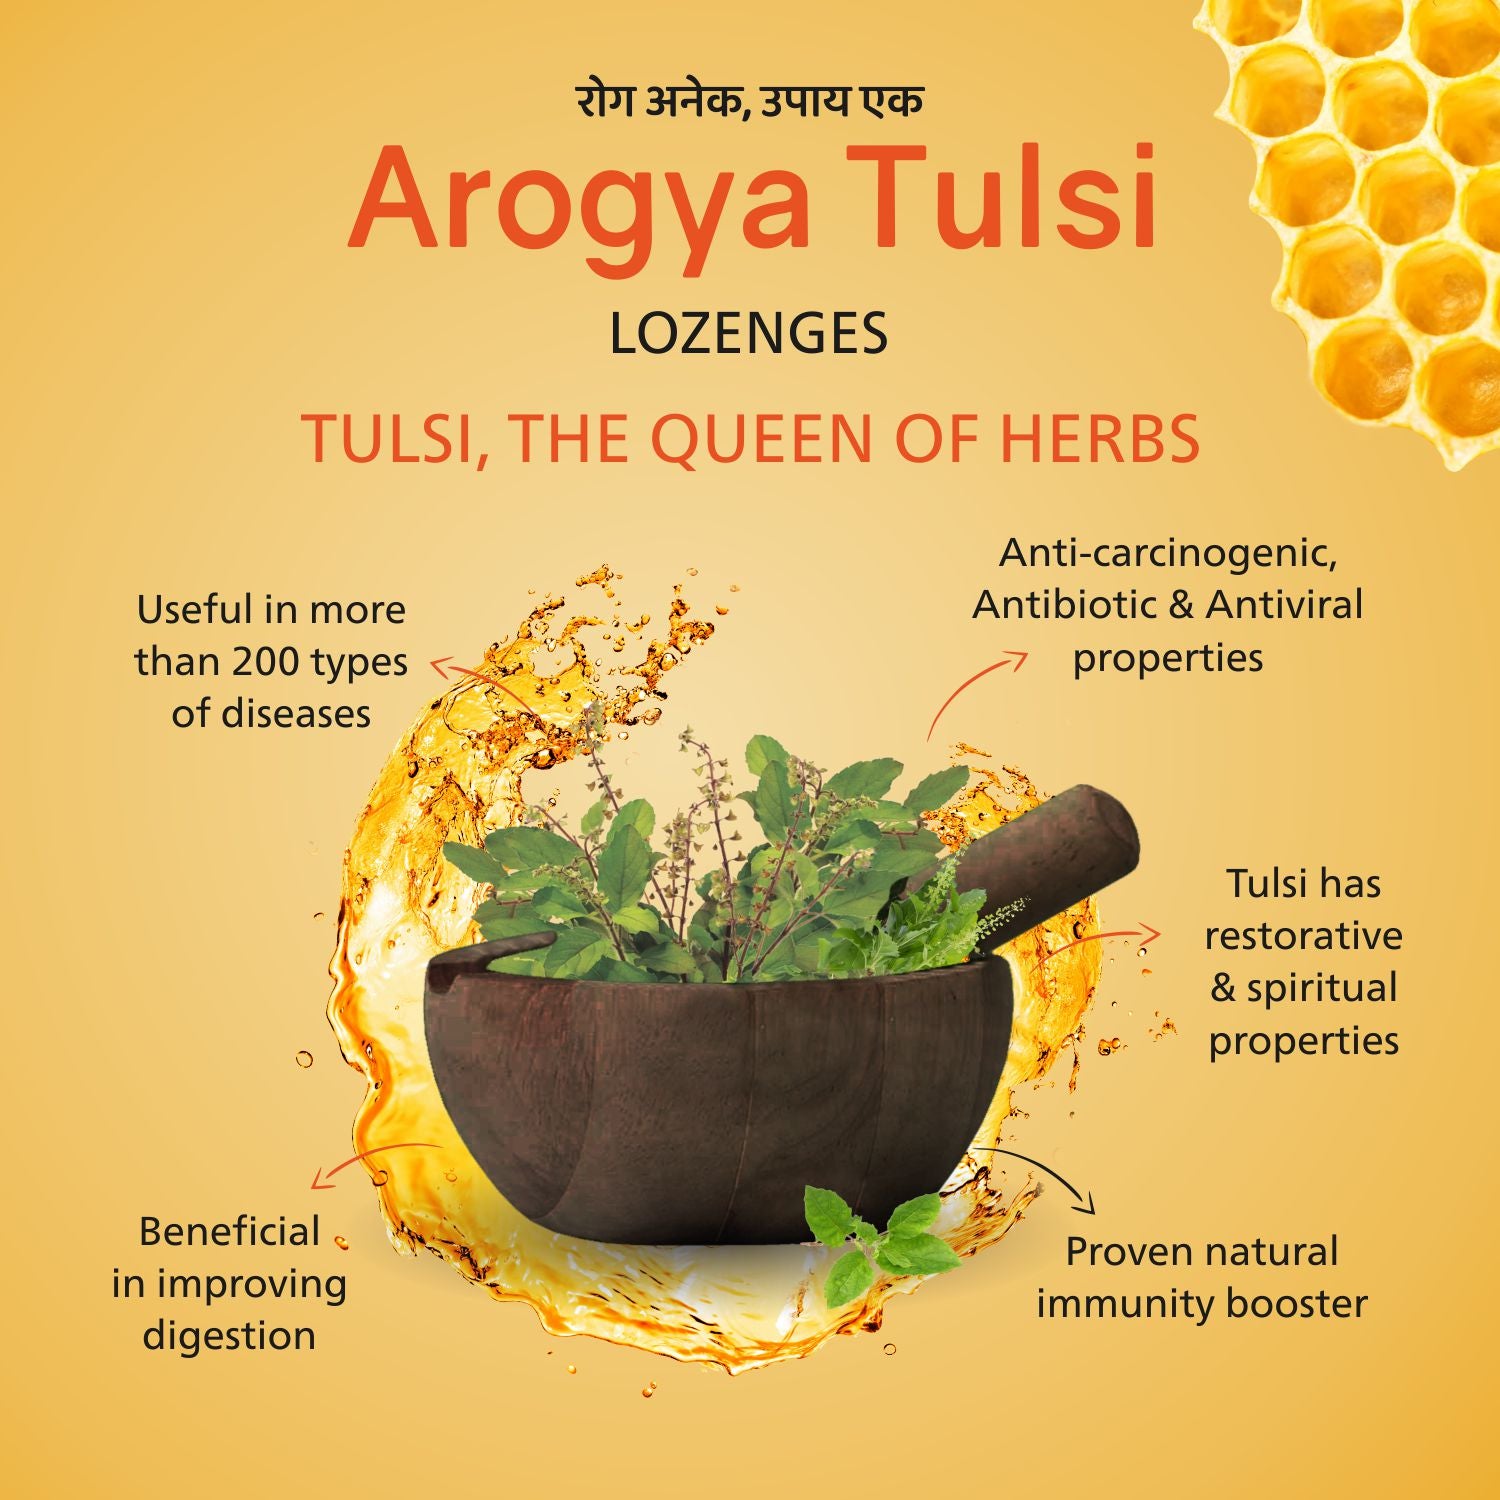 Arogya Tulsi Lozenges (Honey Lemon Flavour)